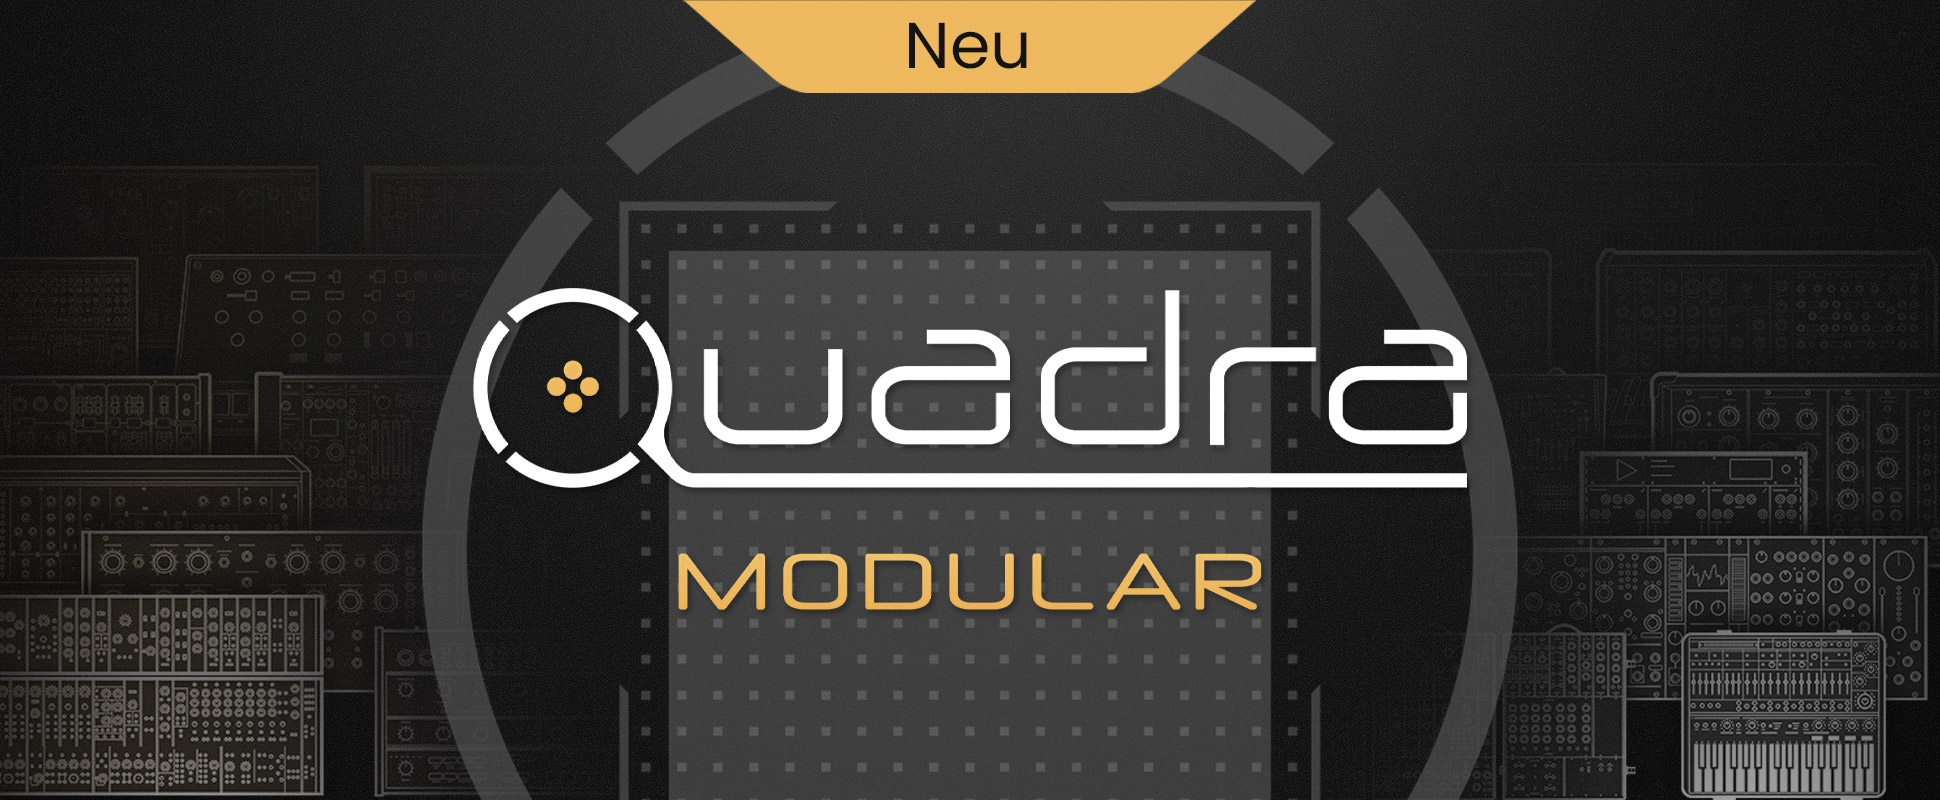 Quadra Modular - New